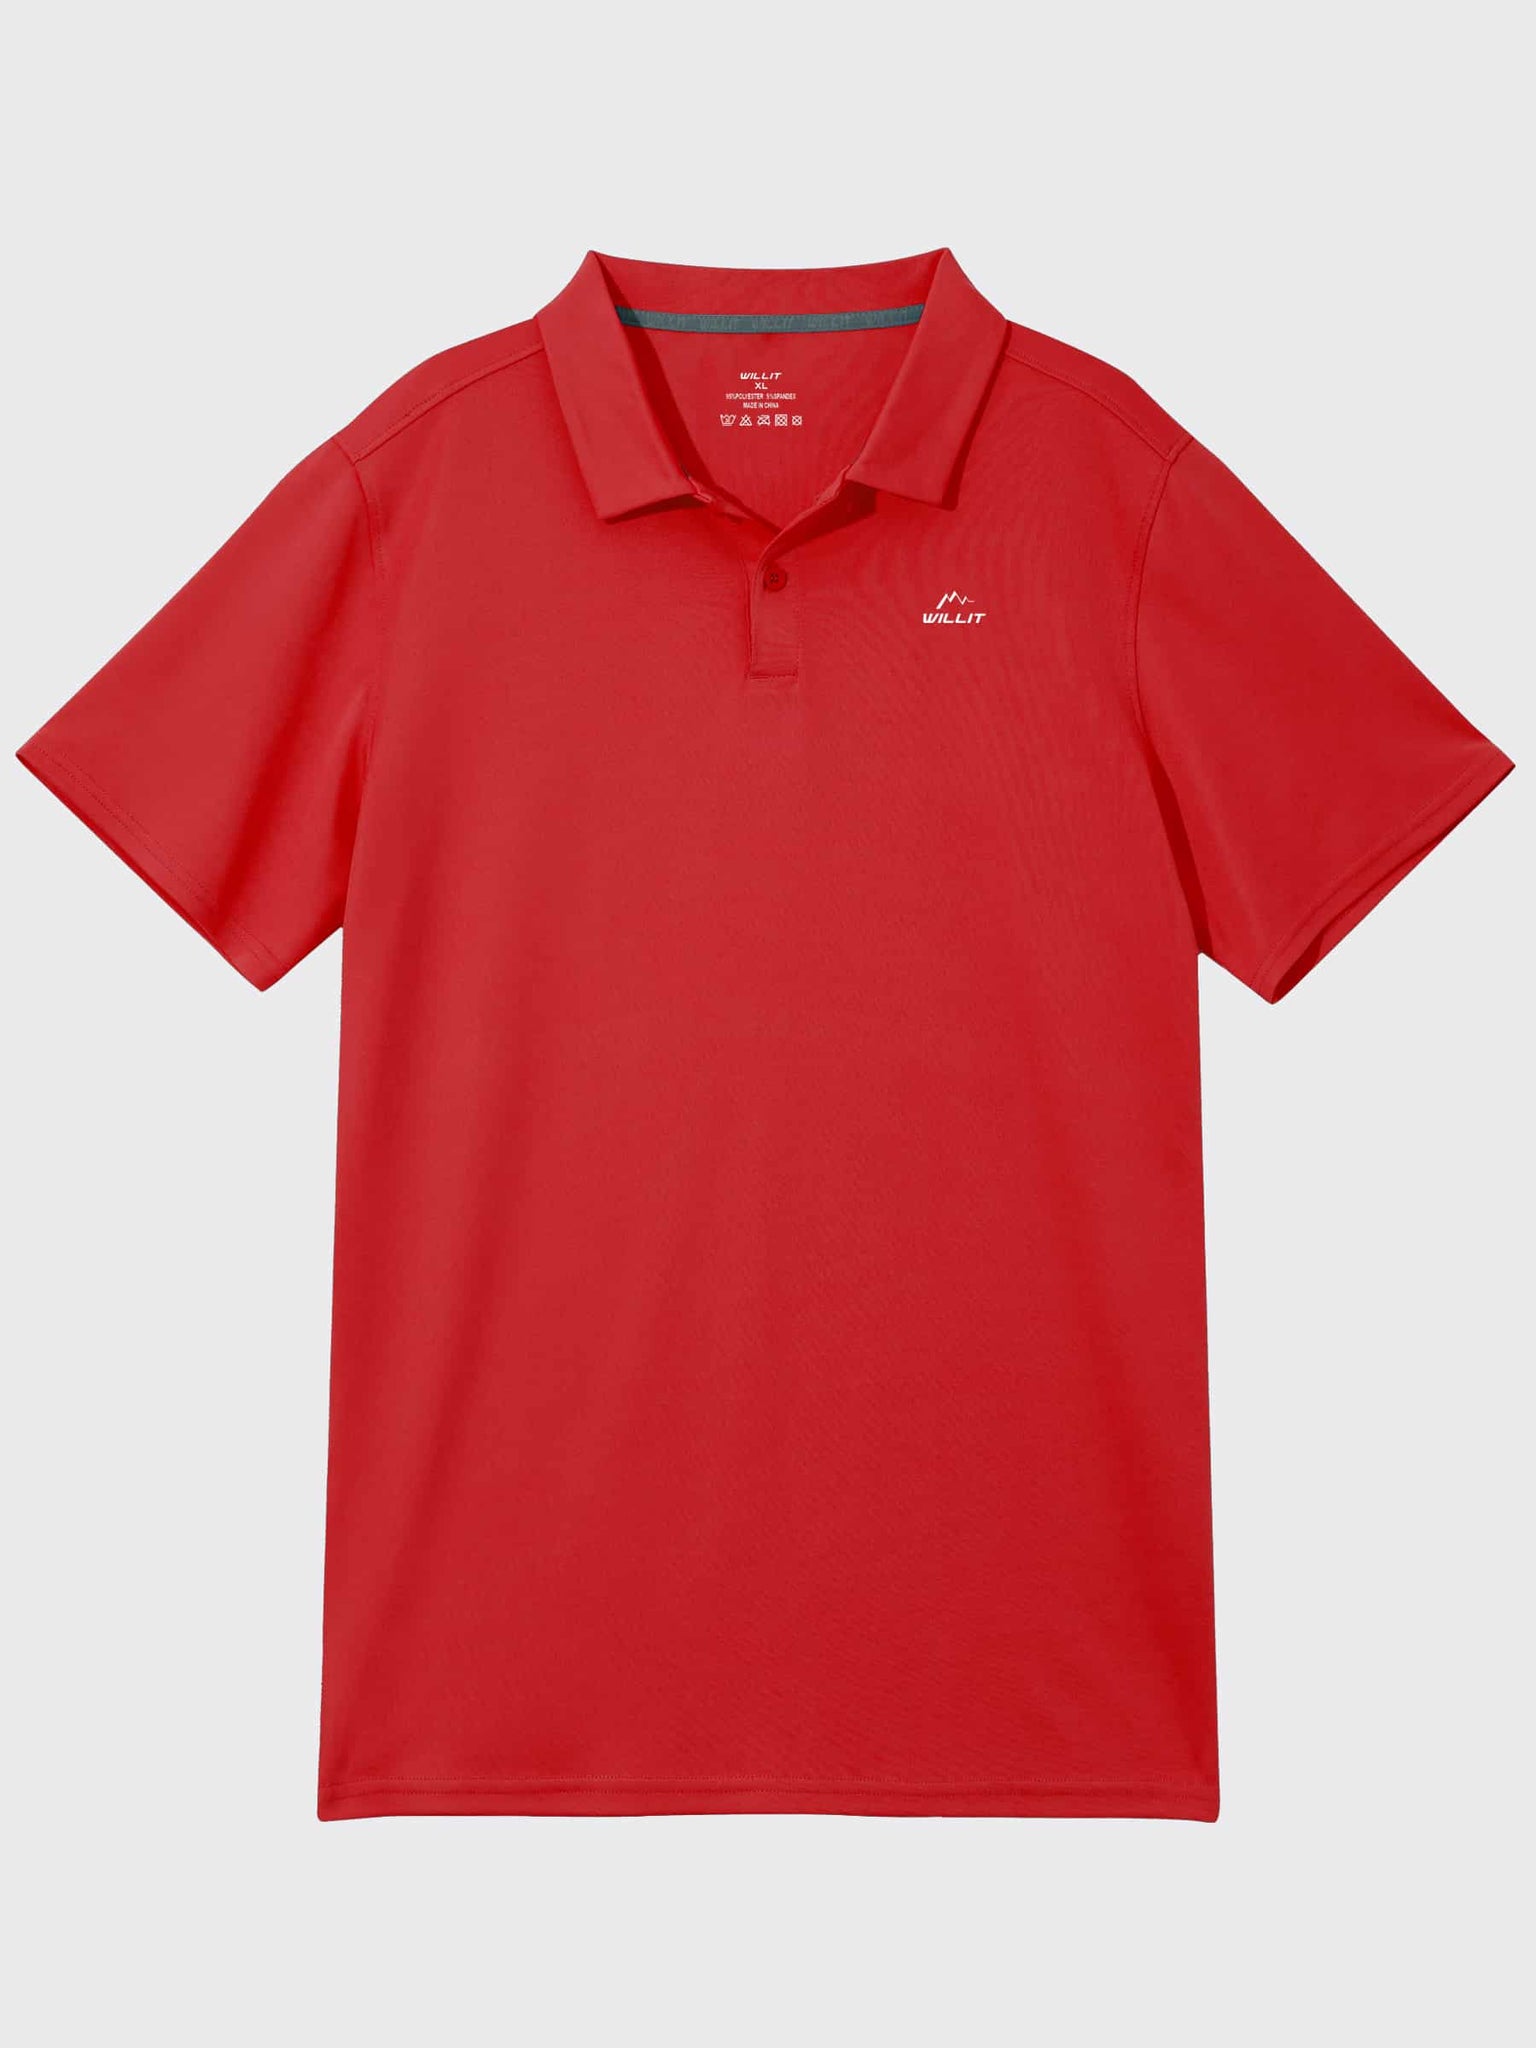 Youth Golf Polo Sun Shirts_Red_laydown4